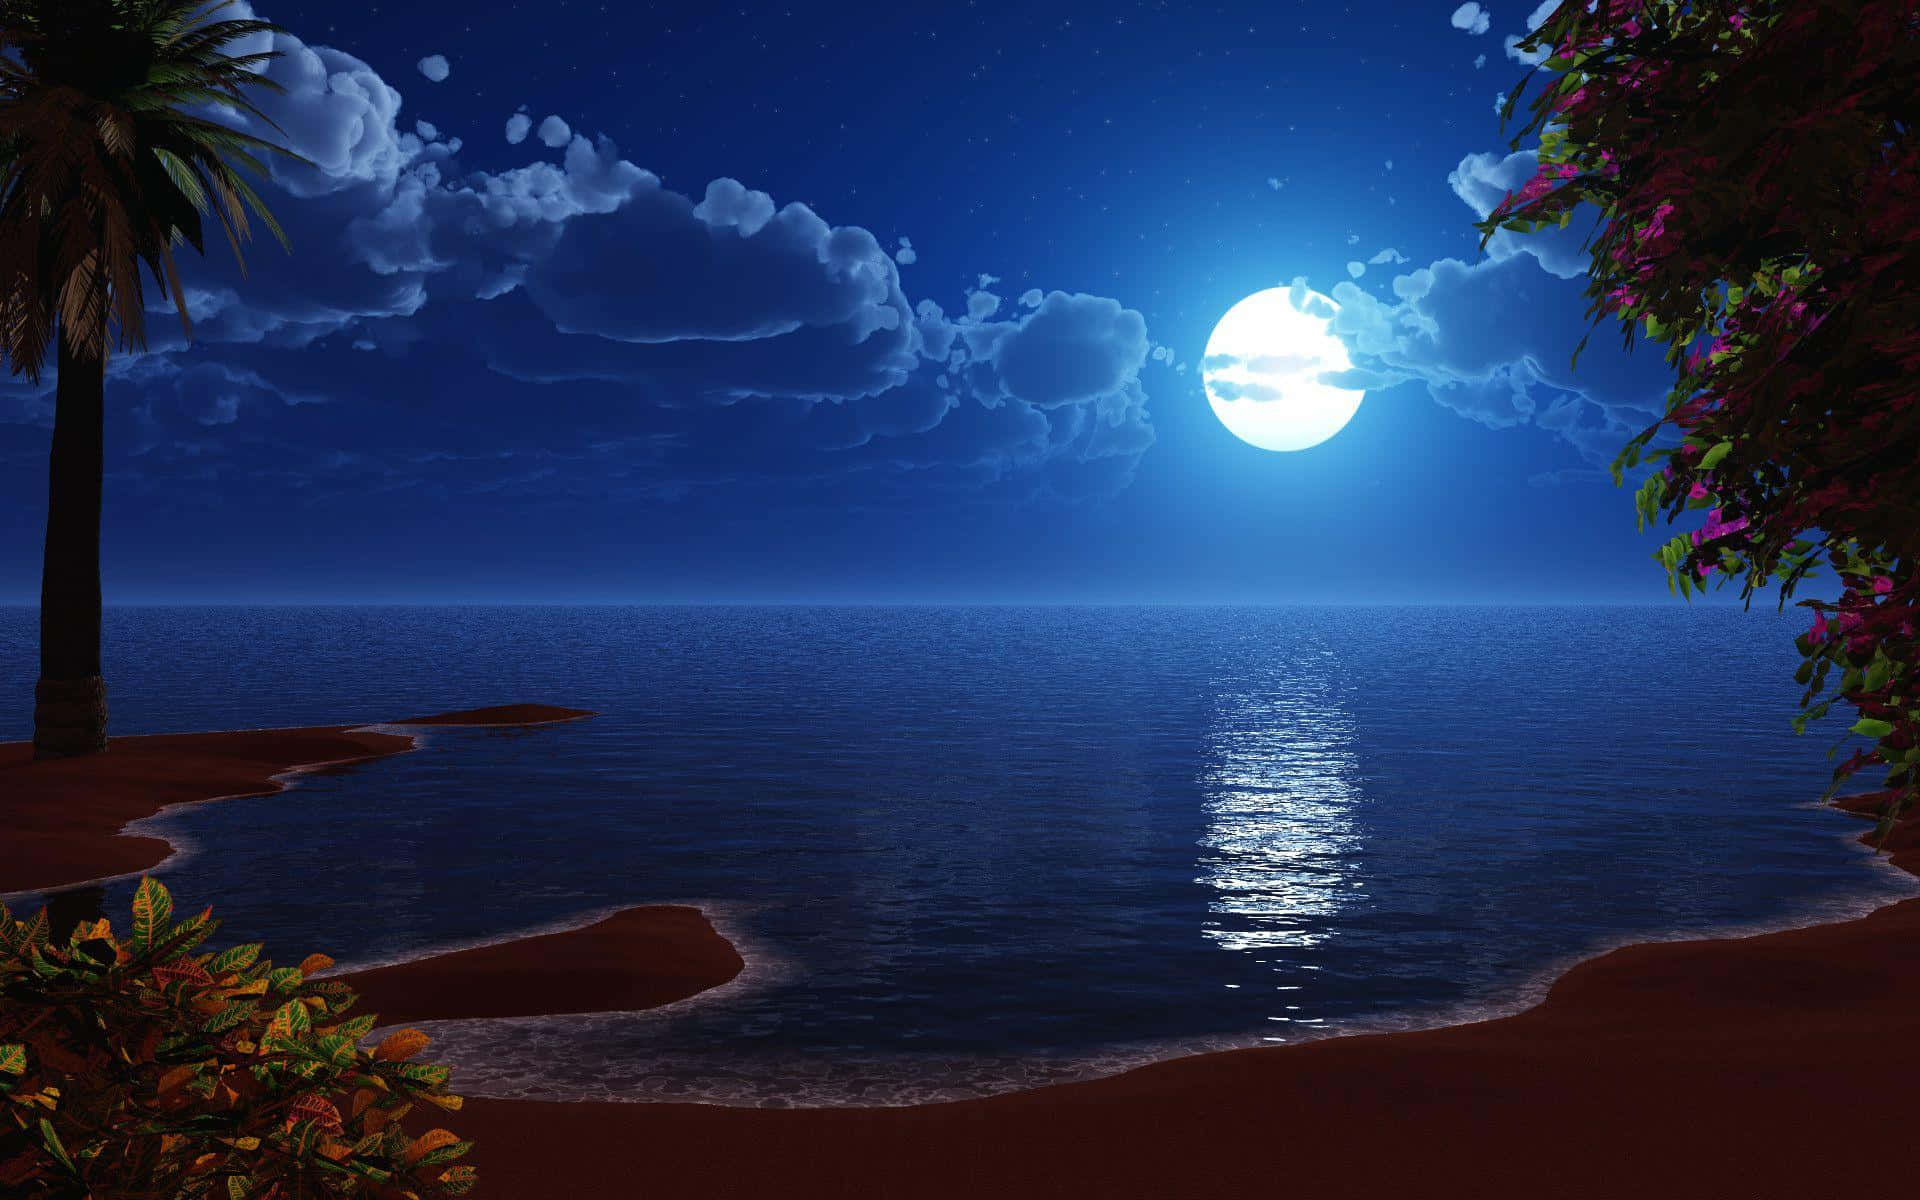 A Stunning Moonlit Nightscape